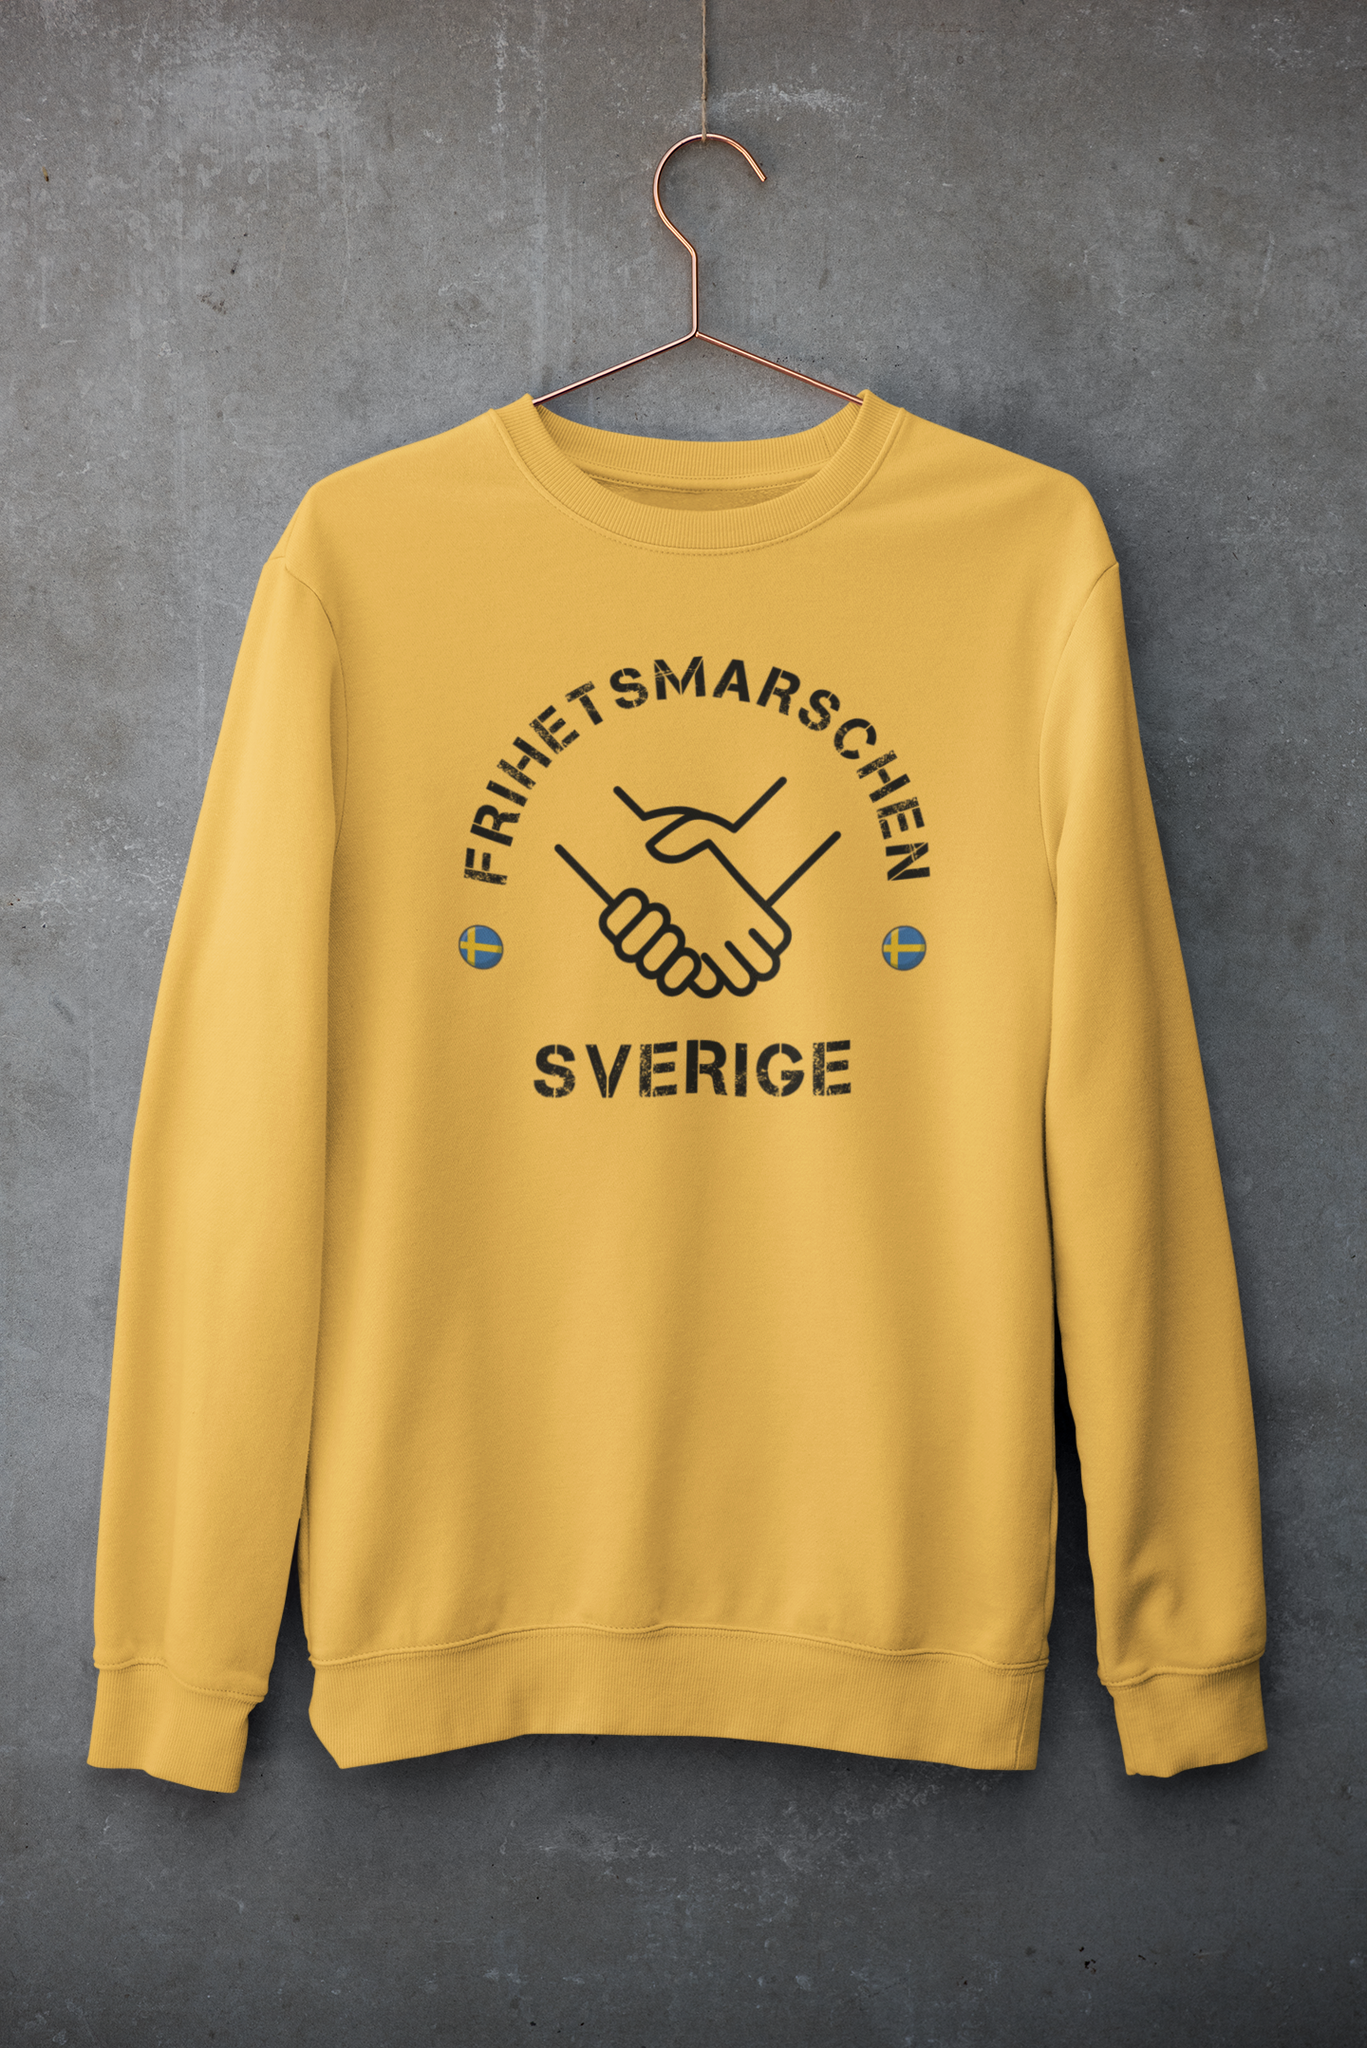 Frihetsmarschen Sverige Sweatshirt Unisex